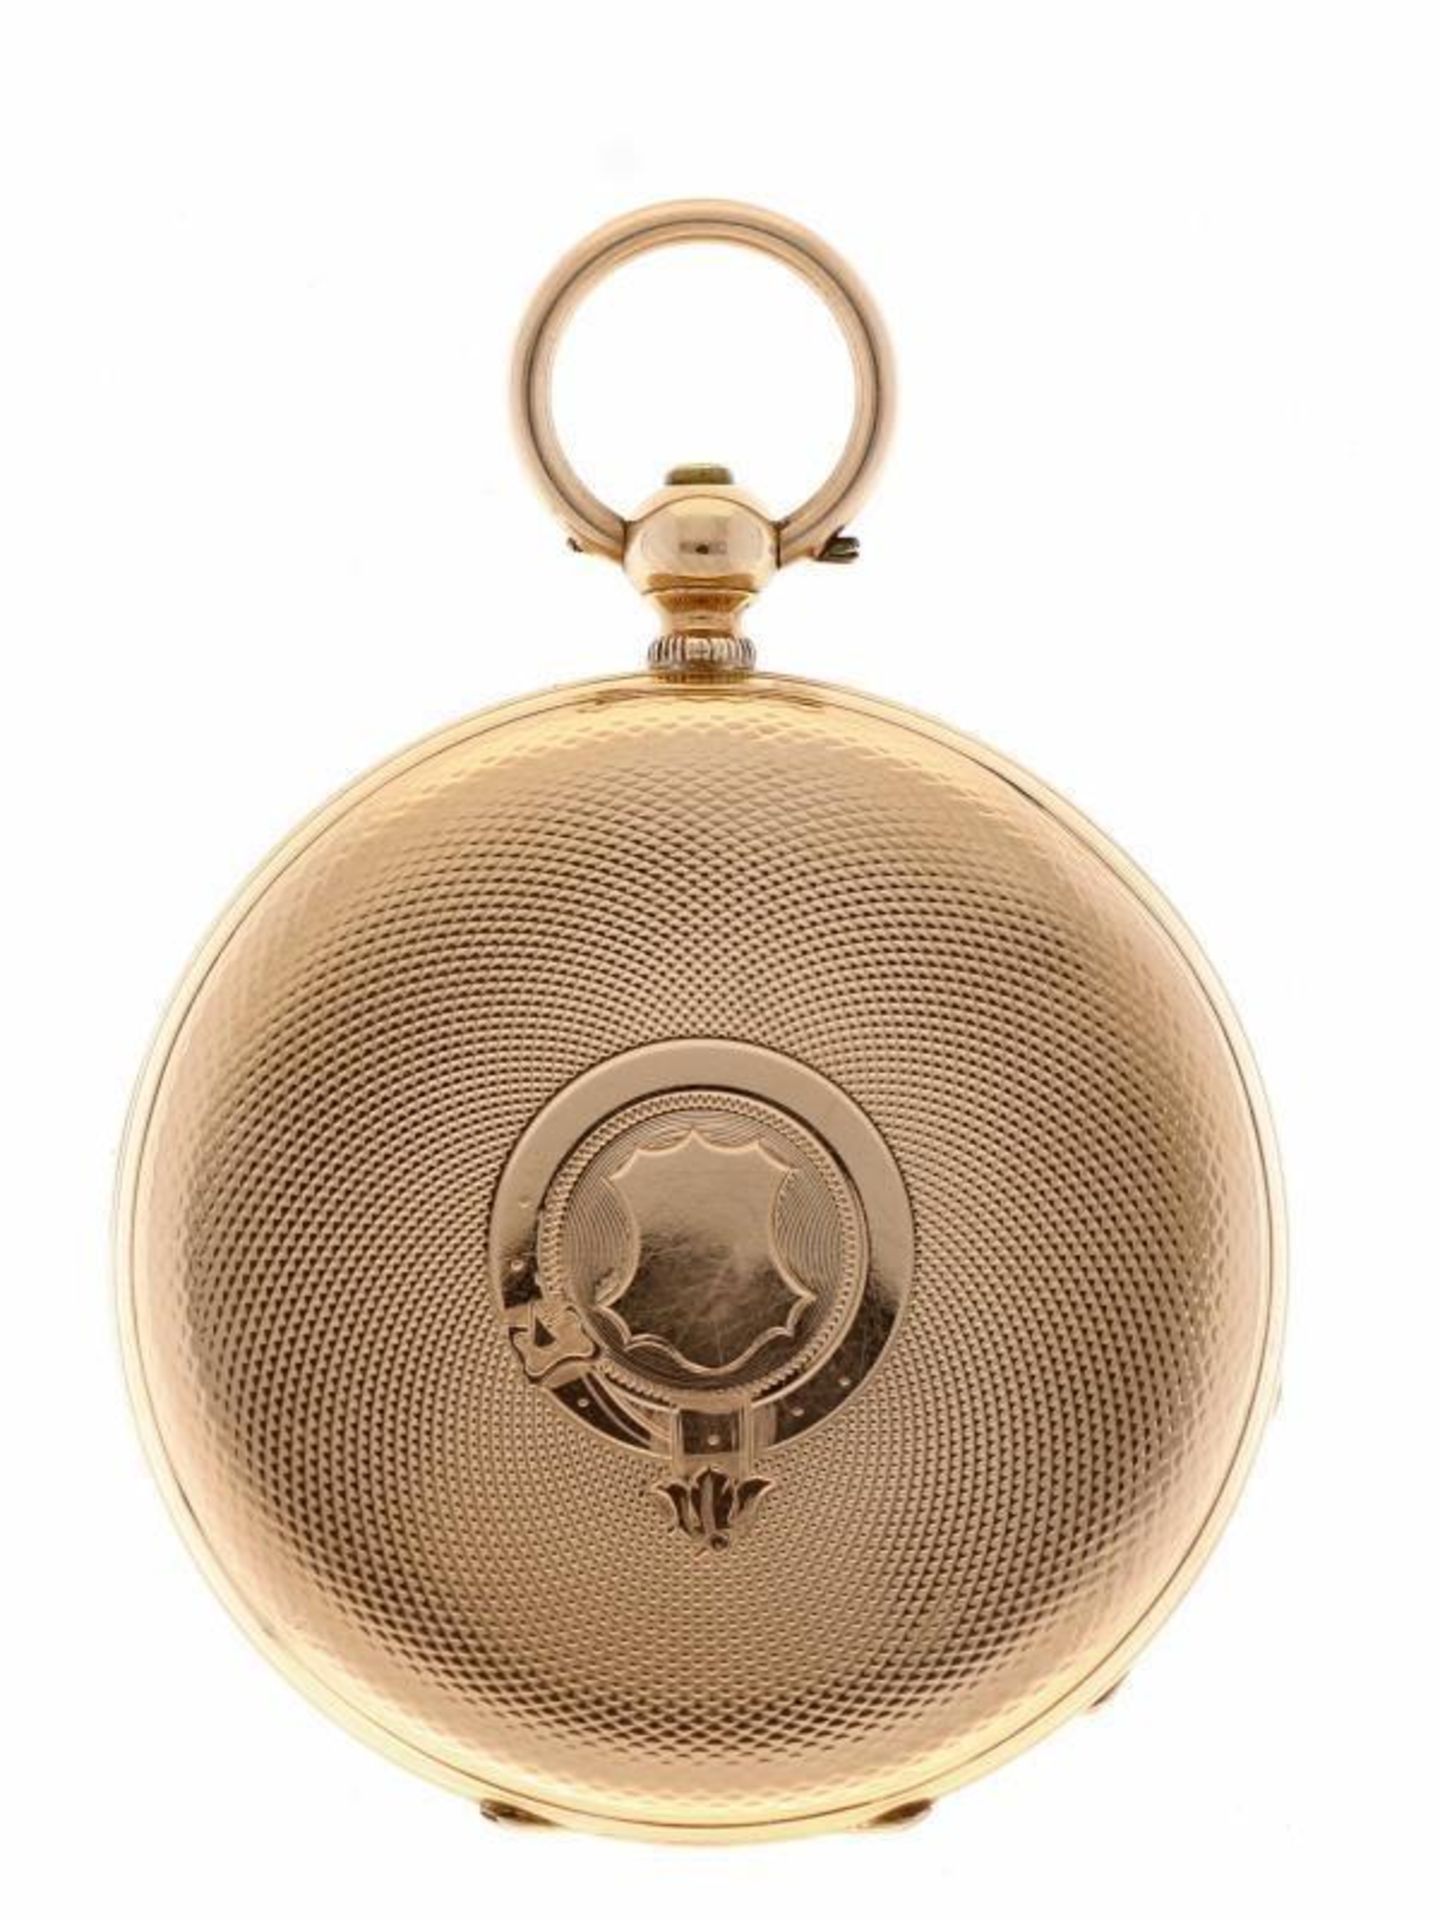 Pocket watch gold - Men's pocket watch - Manual winding - apprx. 1850. - Bild 2 aus 5